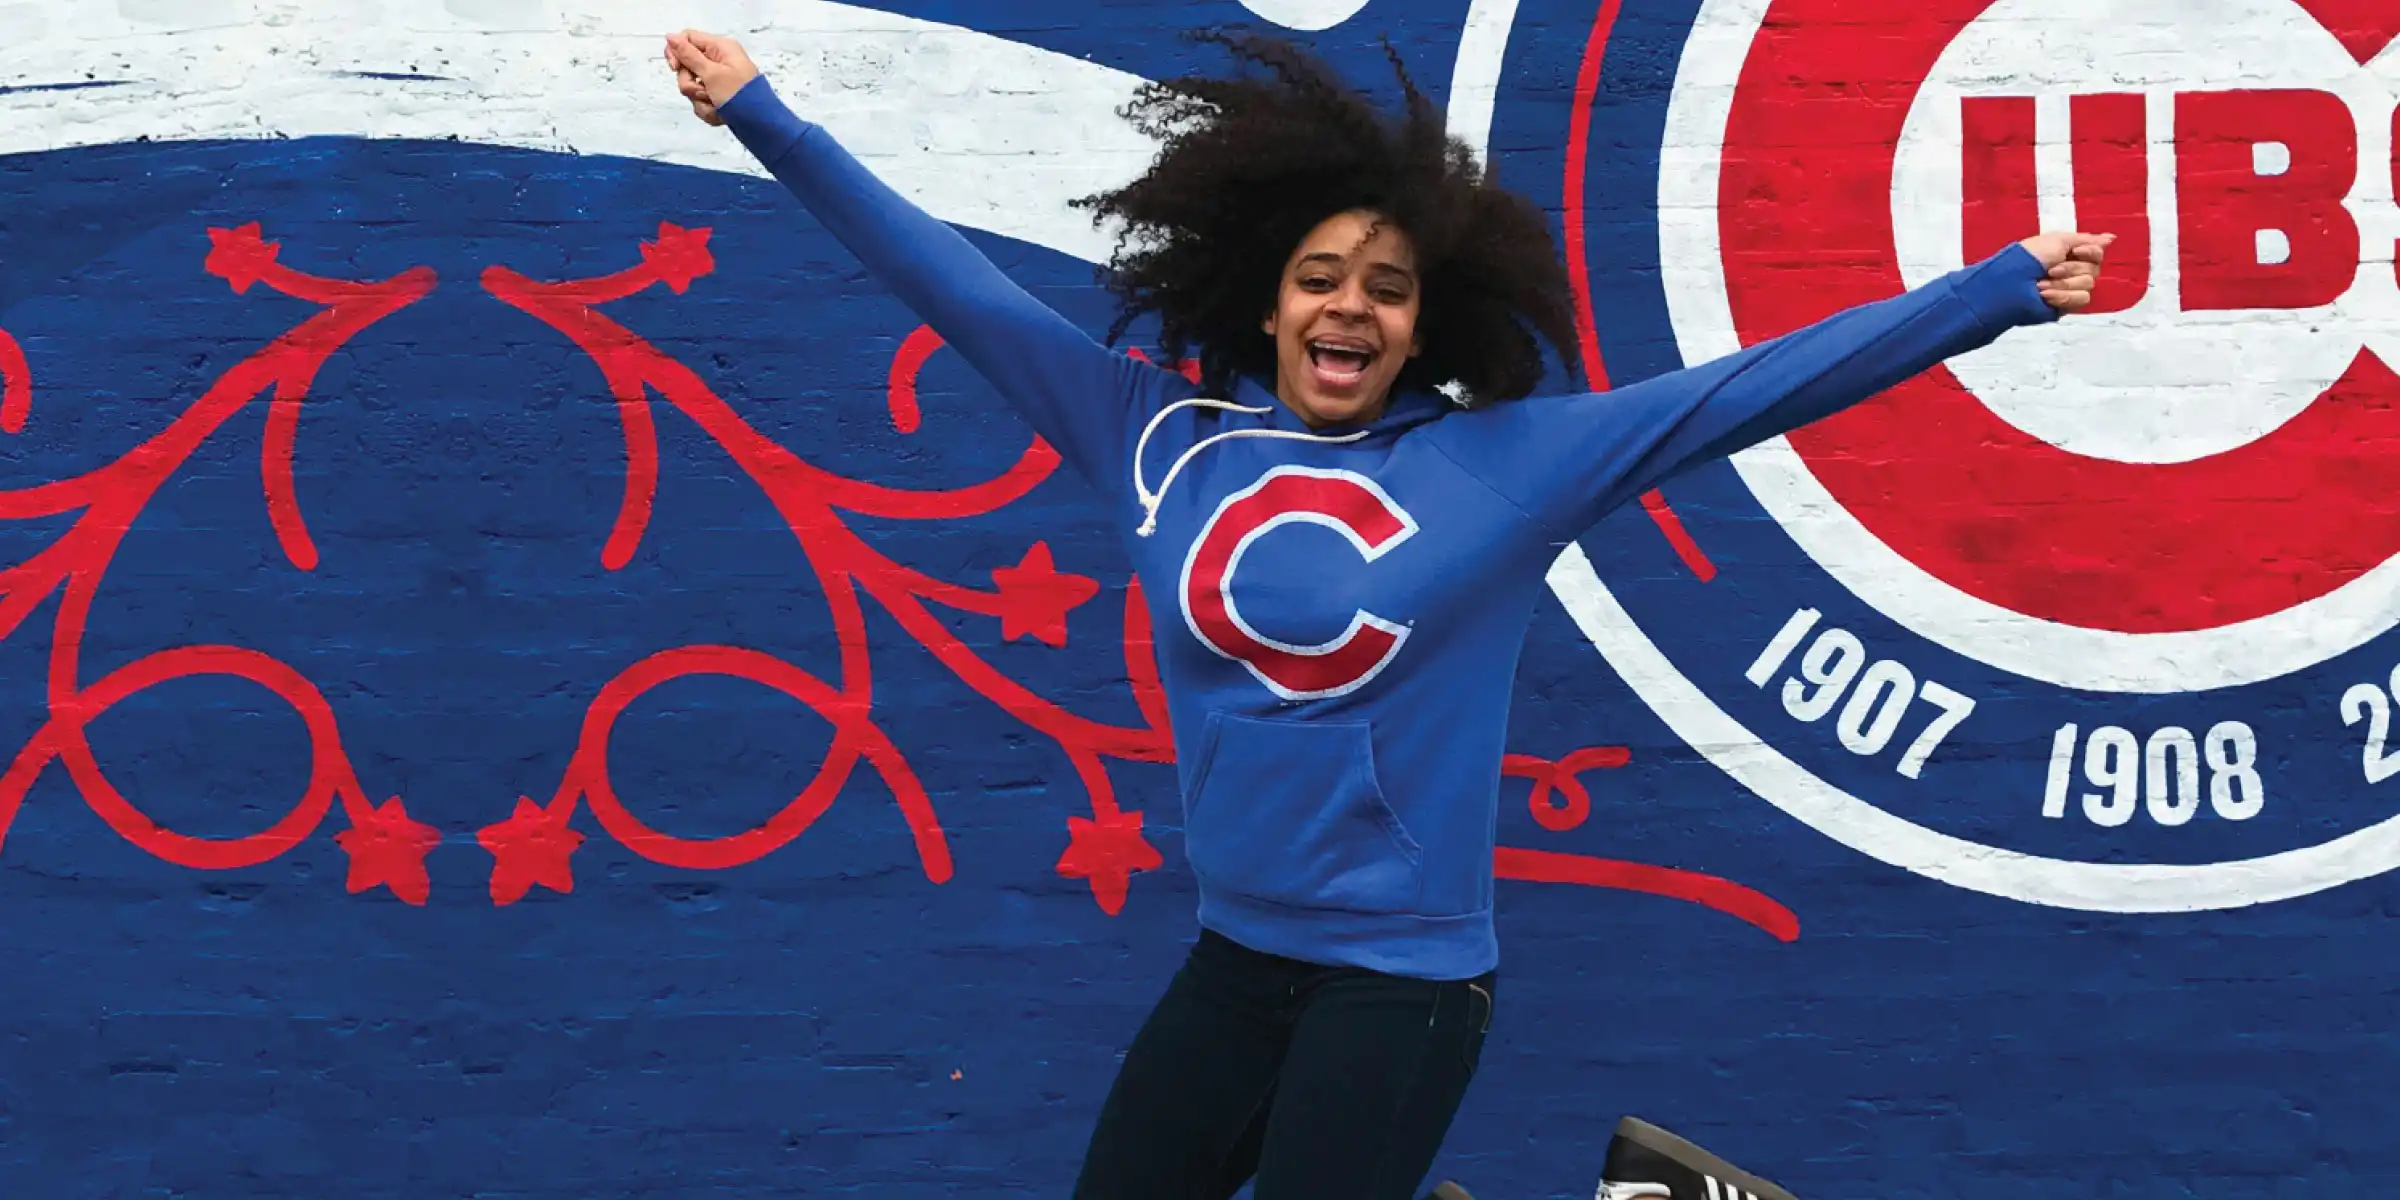 Chicago Cubs fan jumping for joy - desktop version